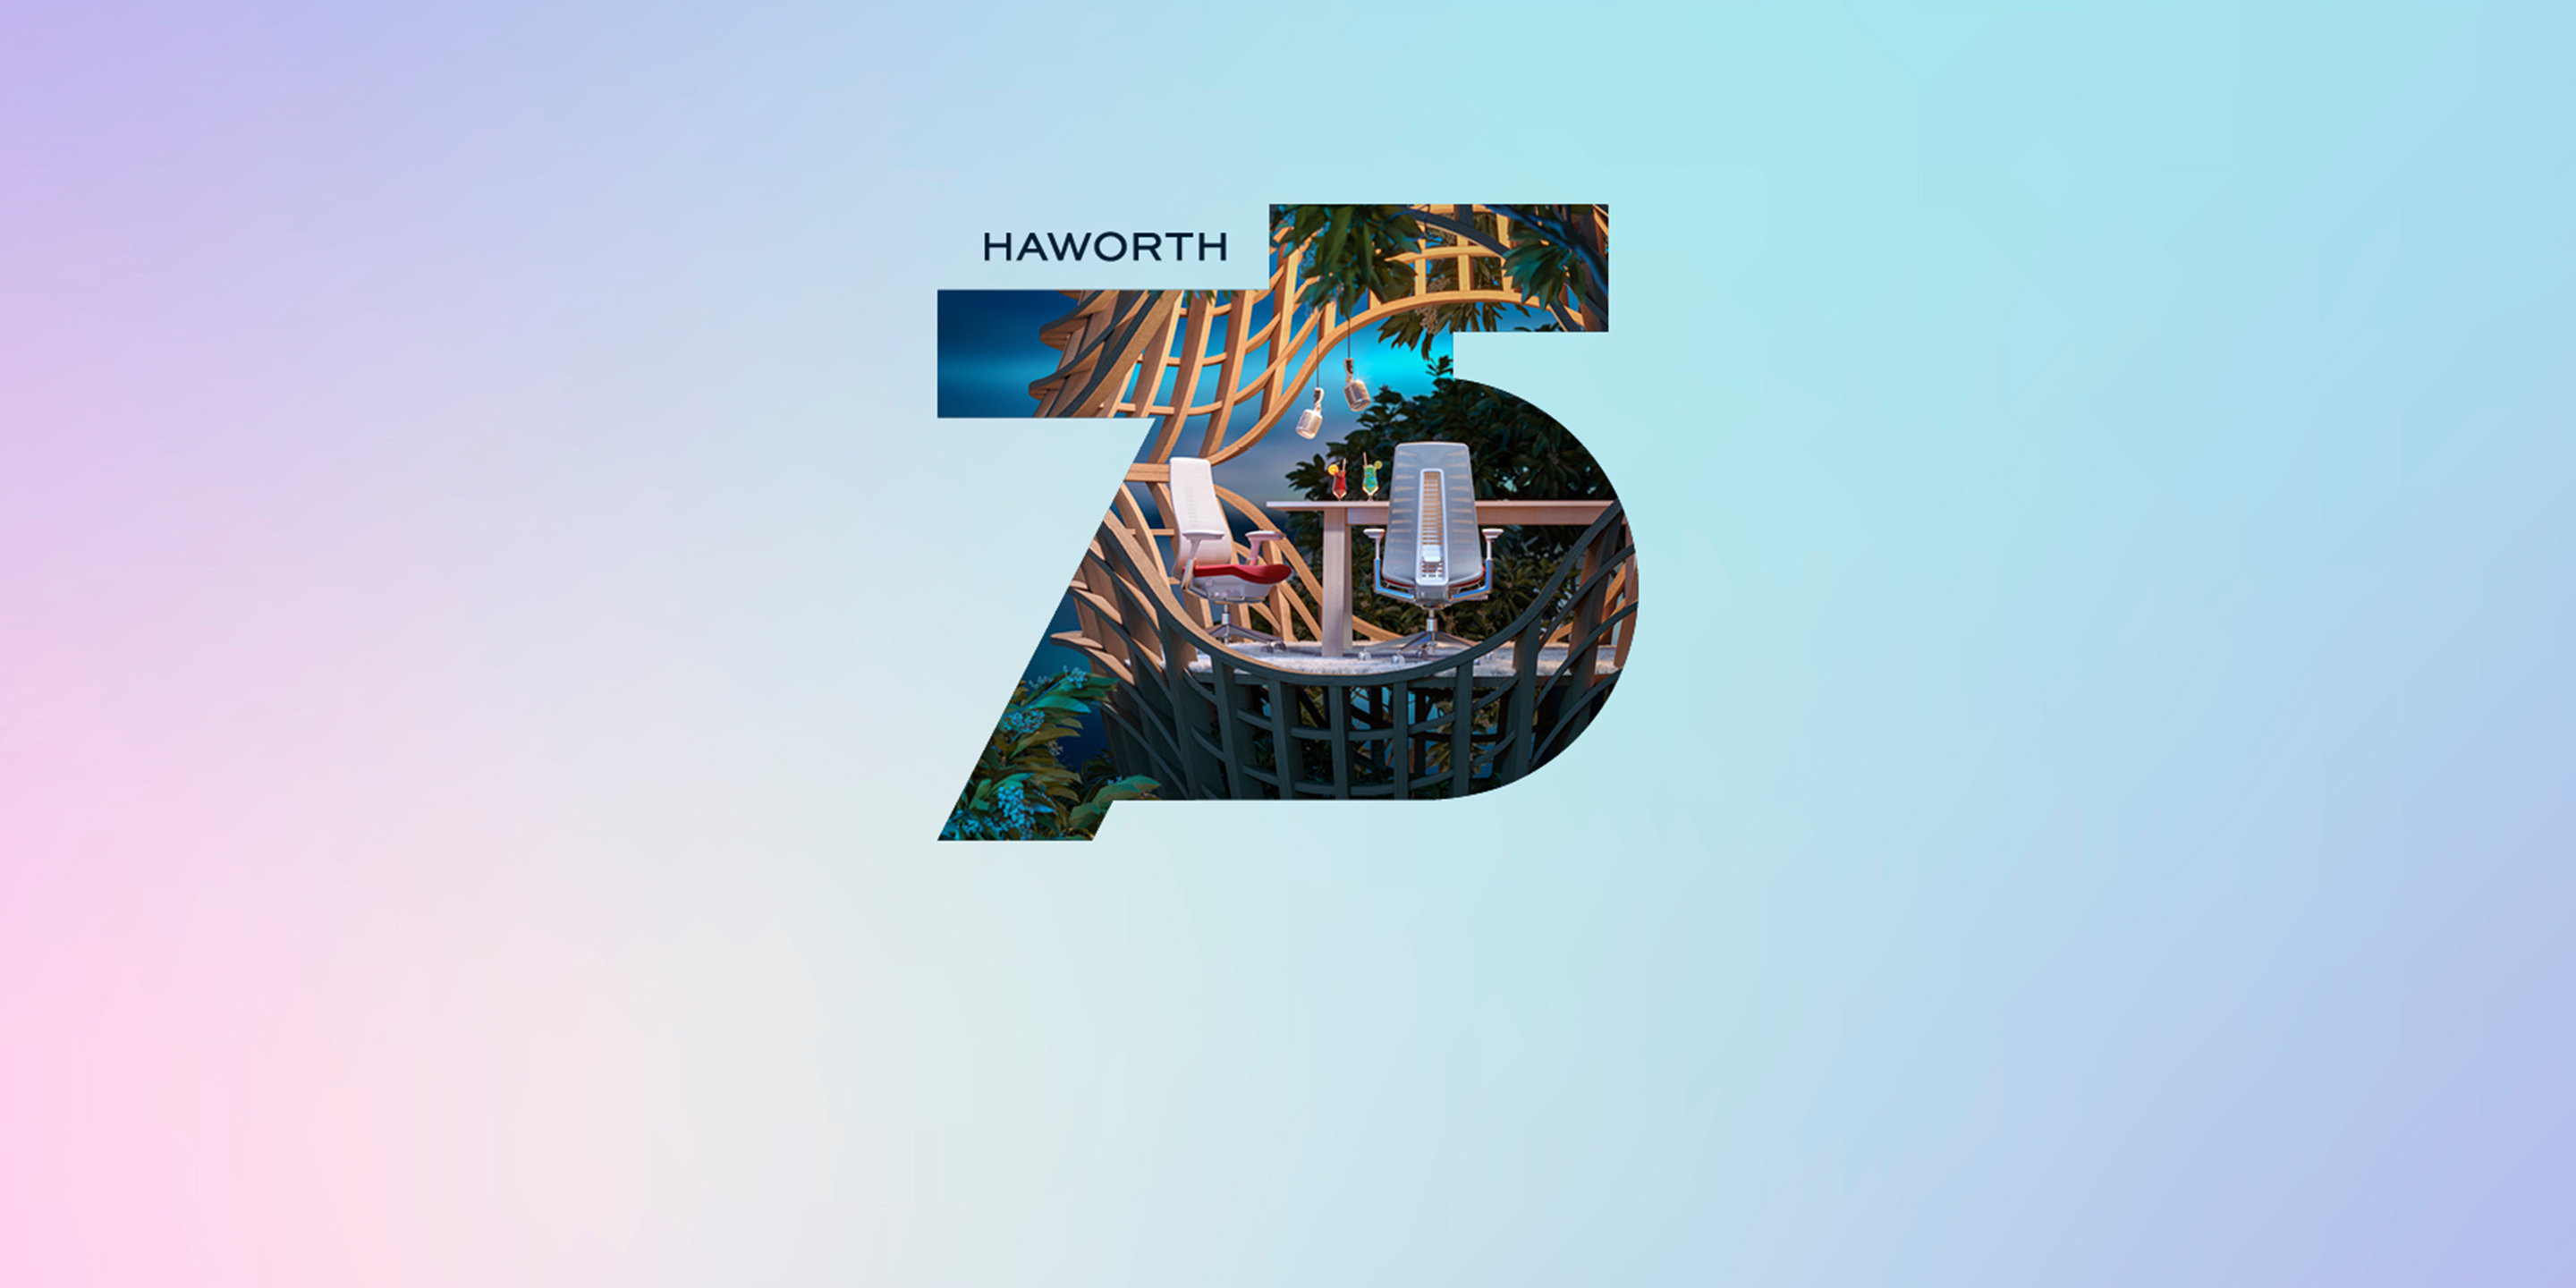 Haworth 75th anniversary logo featuring Fern chairs